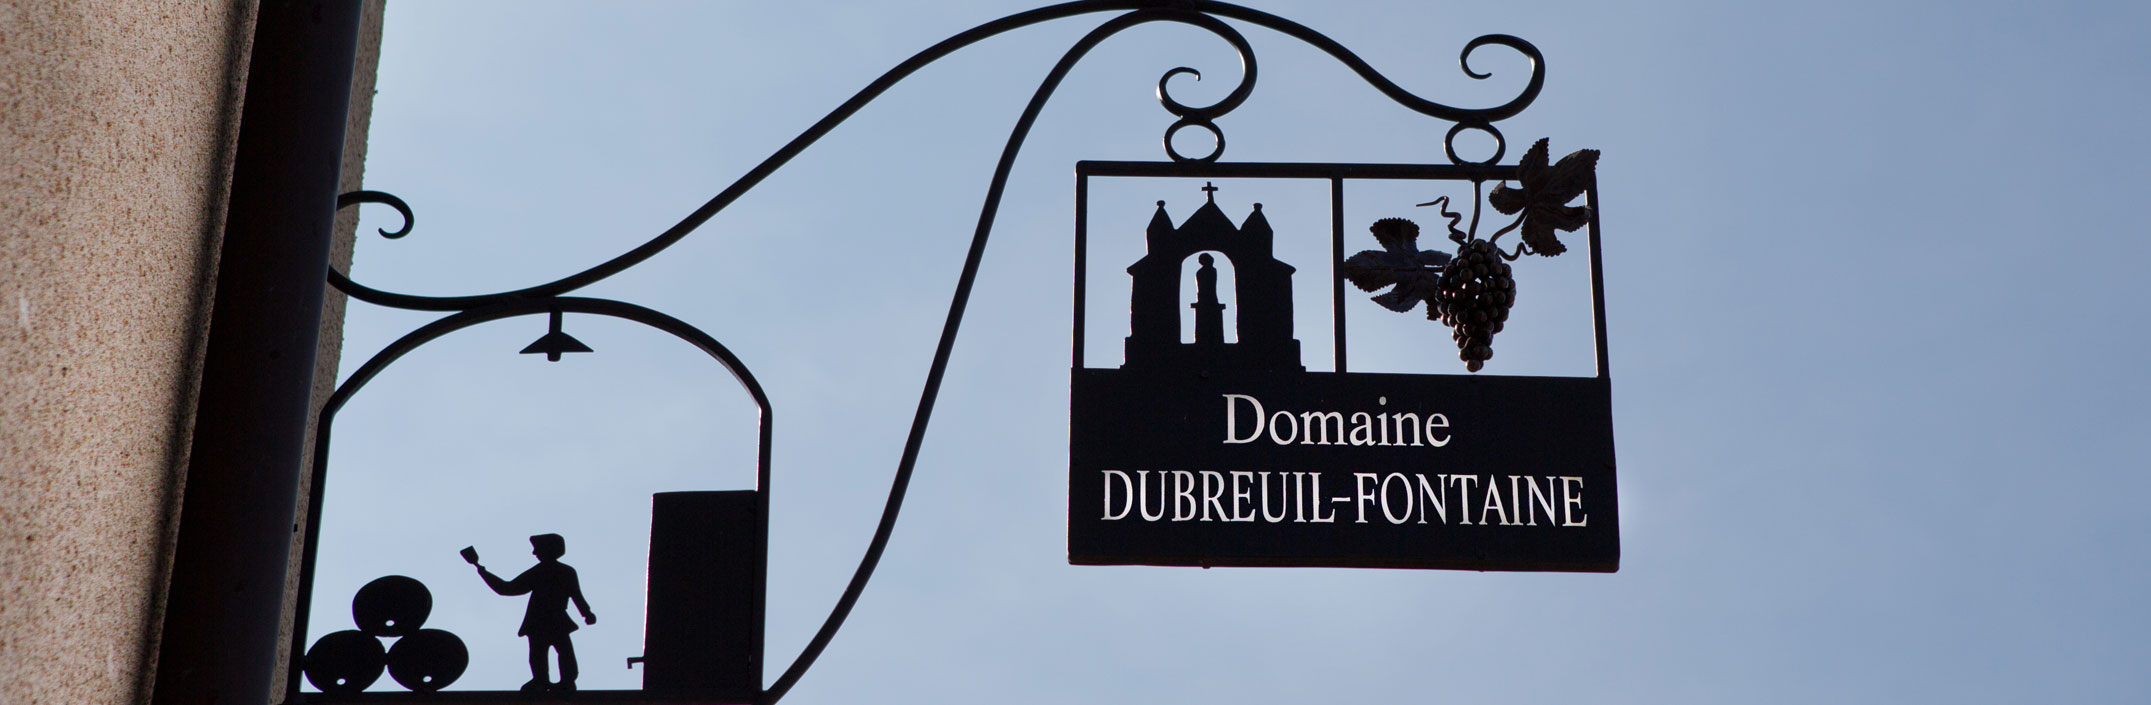 Domaine Dubreuil-Fontaine, Pernand Vergelesses, Bourgogne, Armelle photographe